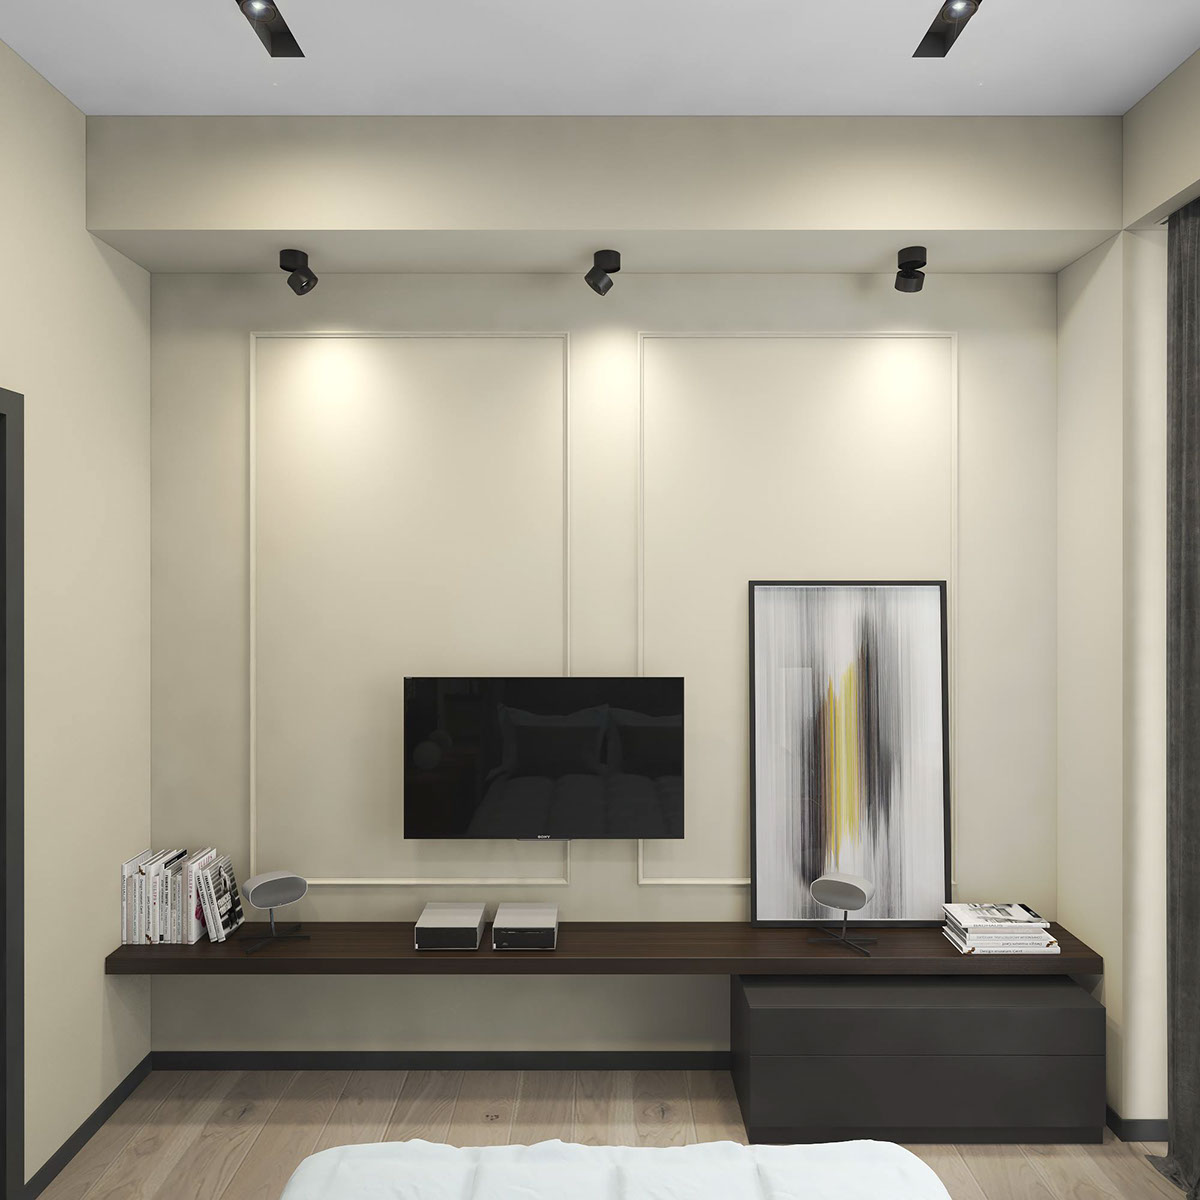 Interior design apartment modern neoclassic tbilisi architecture home residential